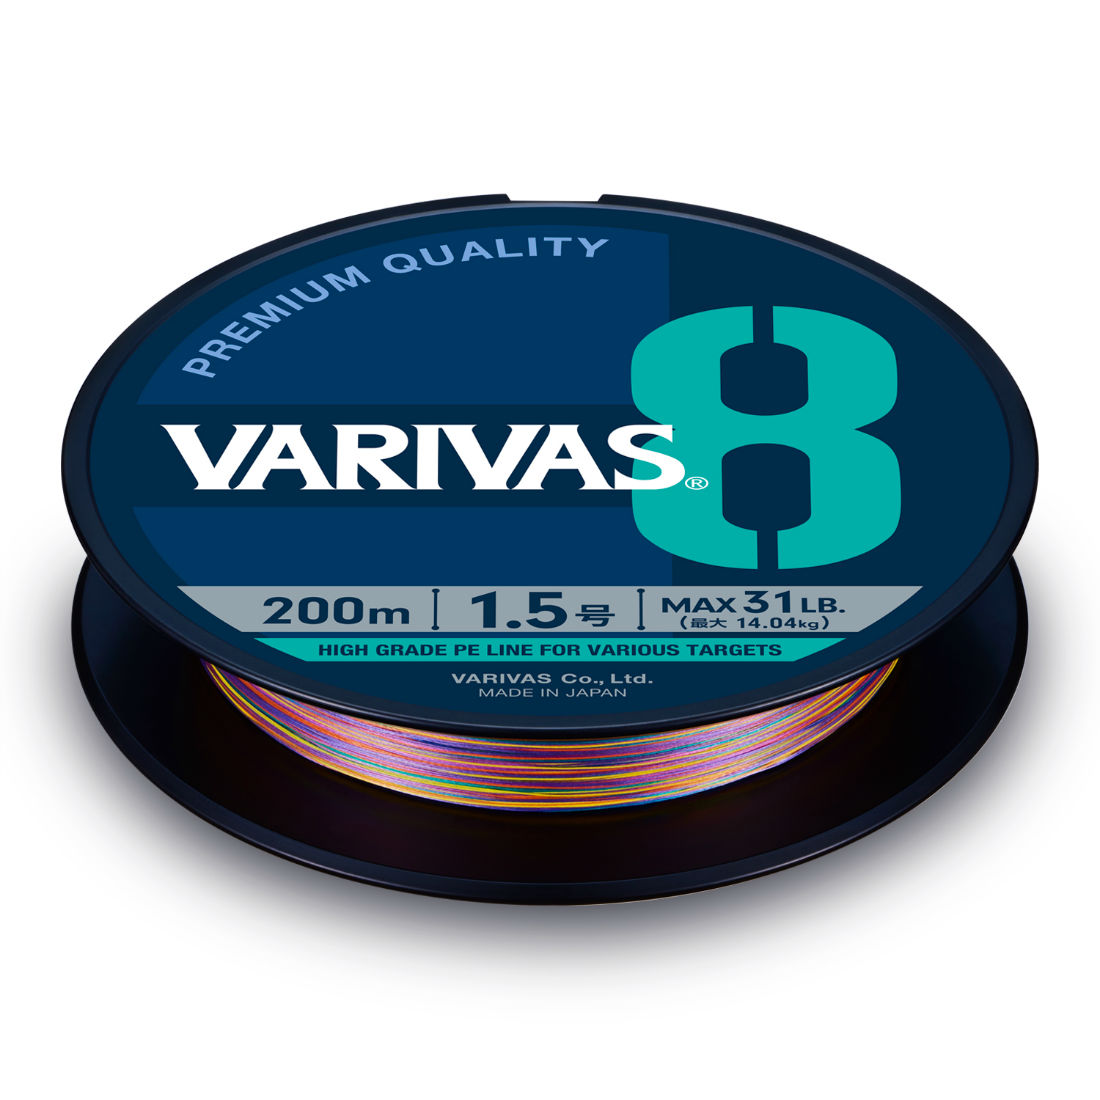 FIR VARIVAS PE 8 MARKING EDITION 300m 0.330mm 61lb Vivid 5 Color